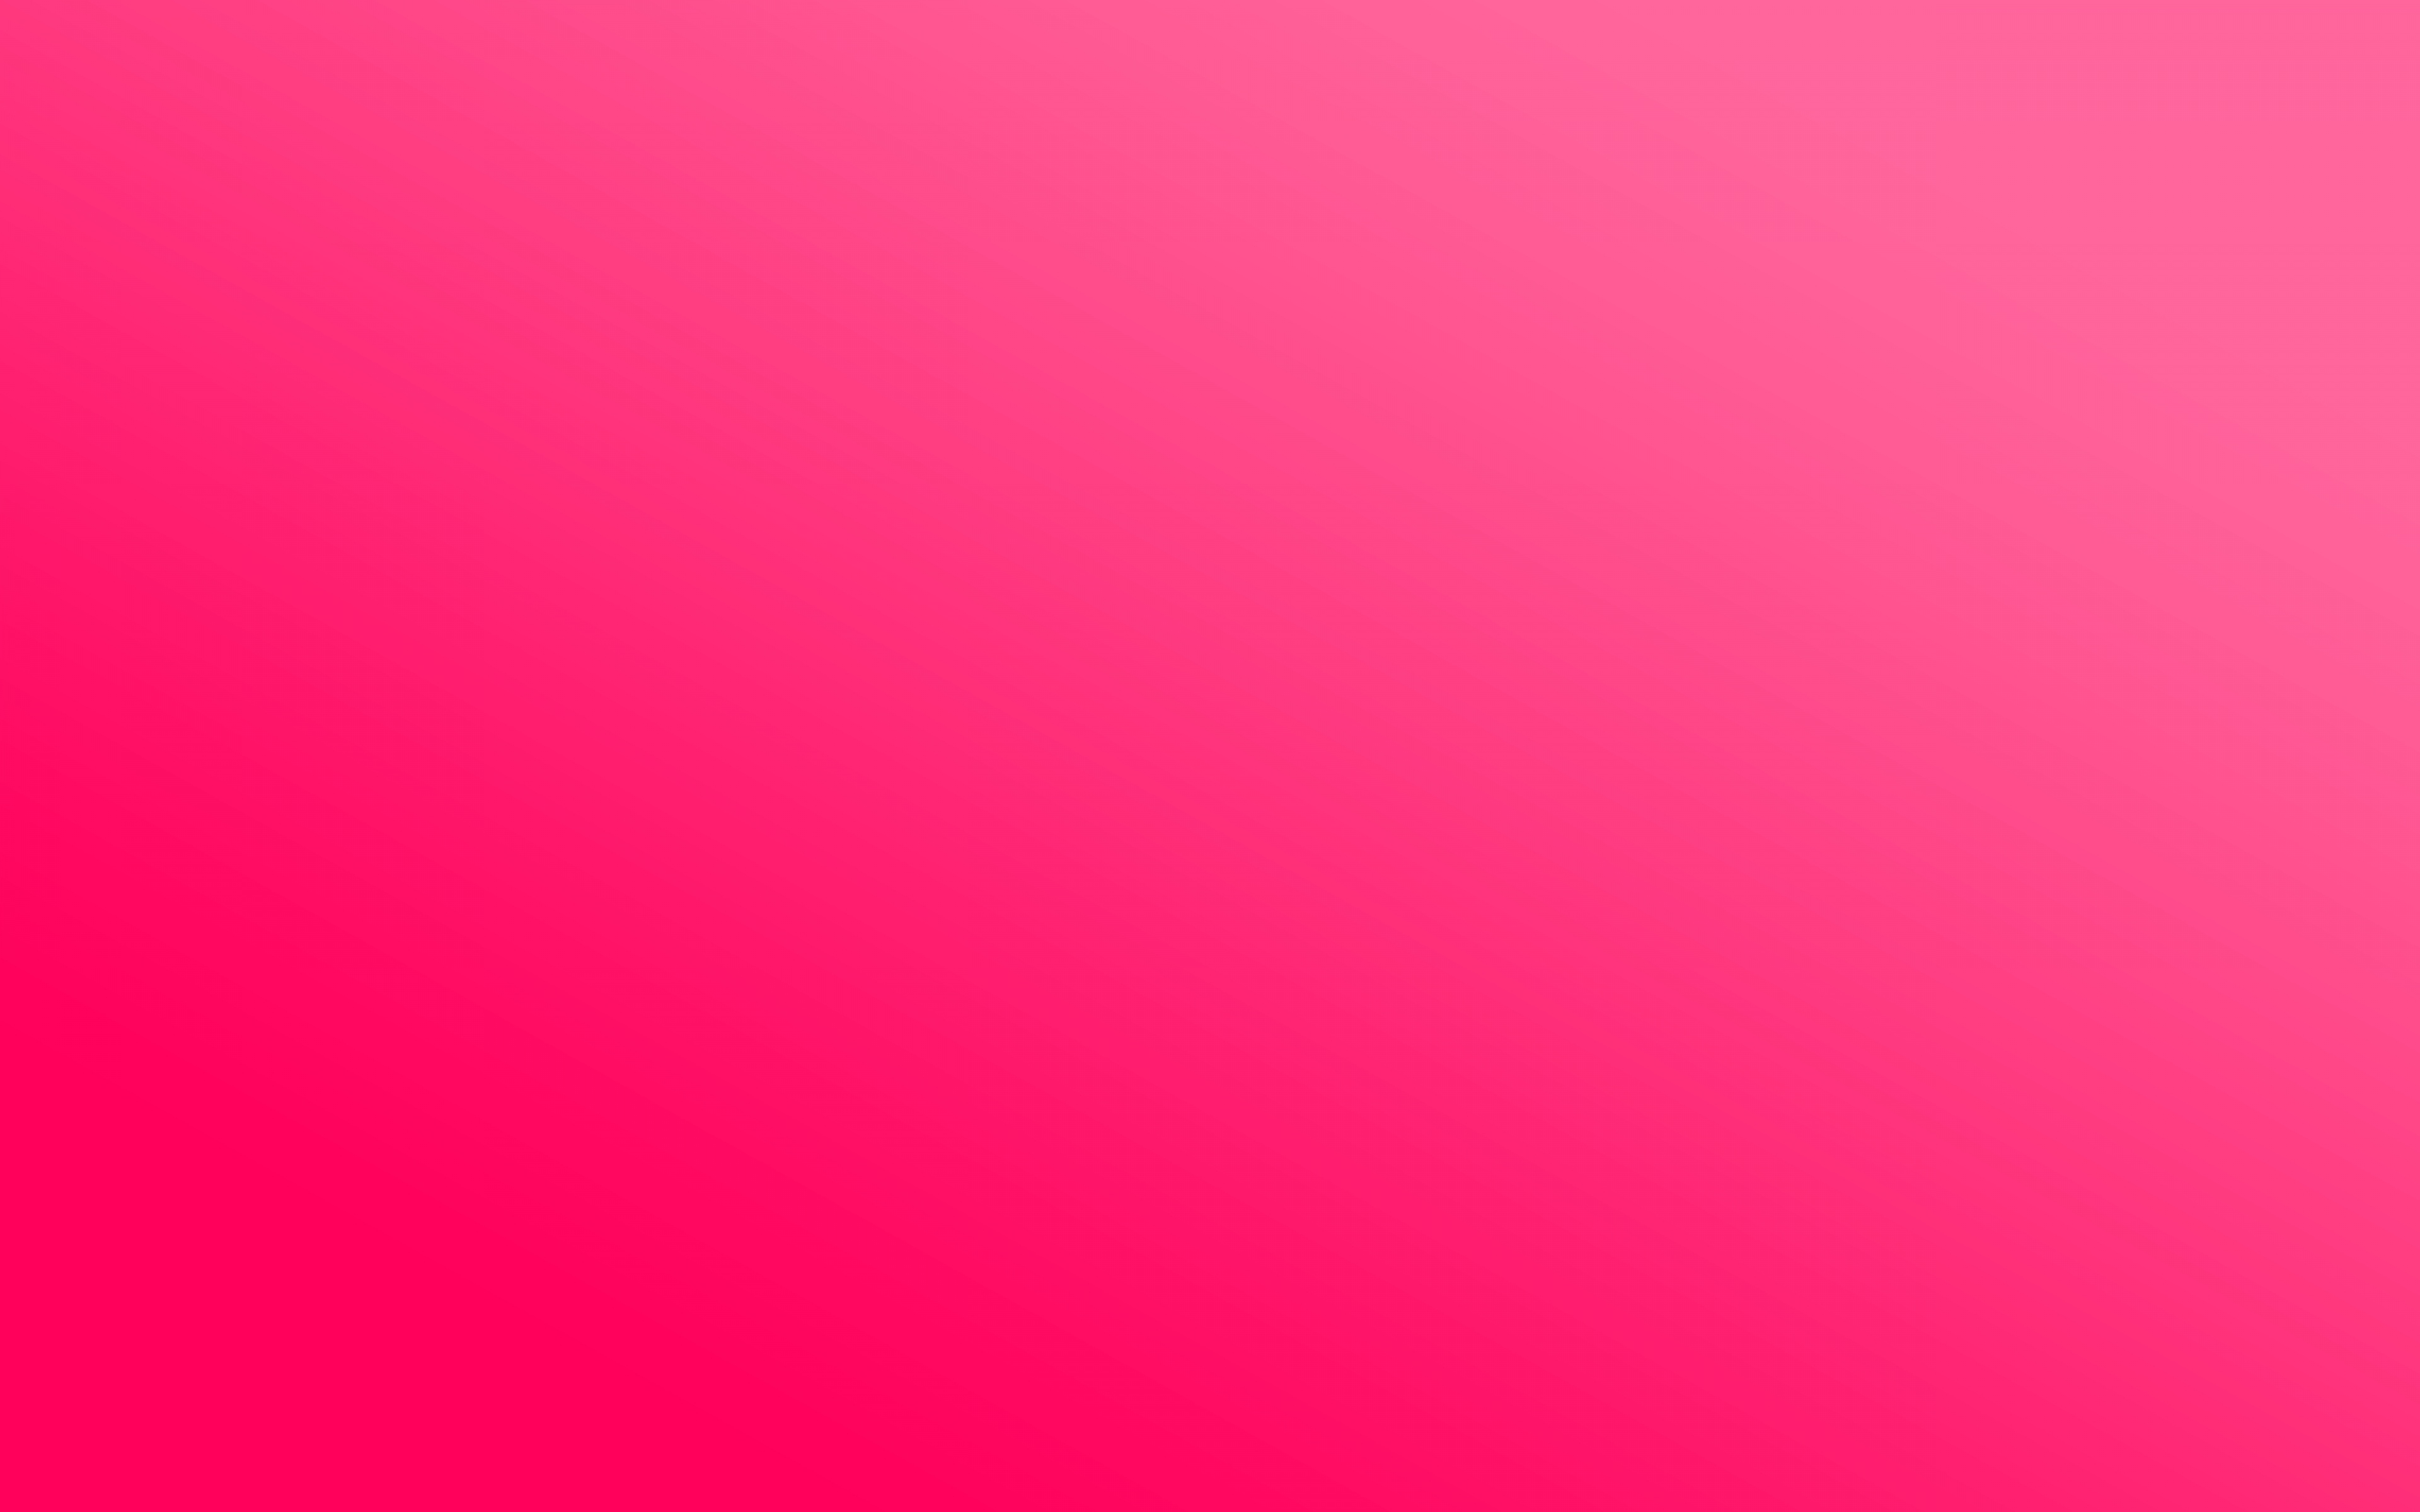 Light Pink Wallpapers - Top 35 Best Light Pink Backgrounds Download